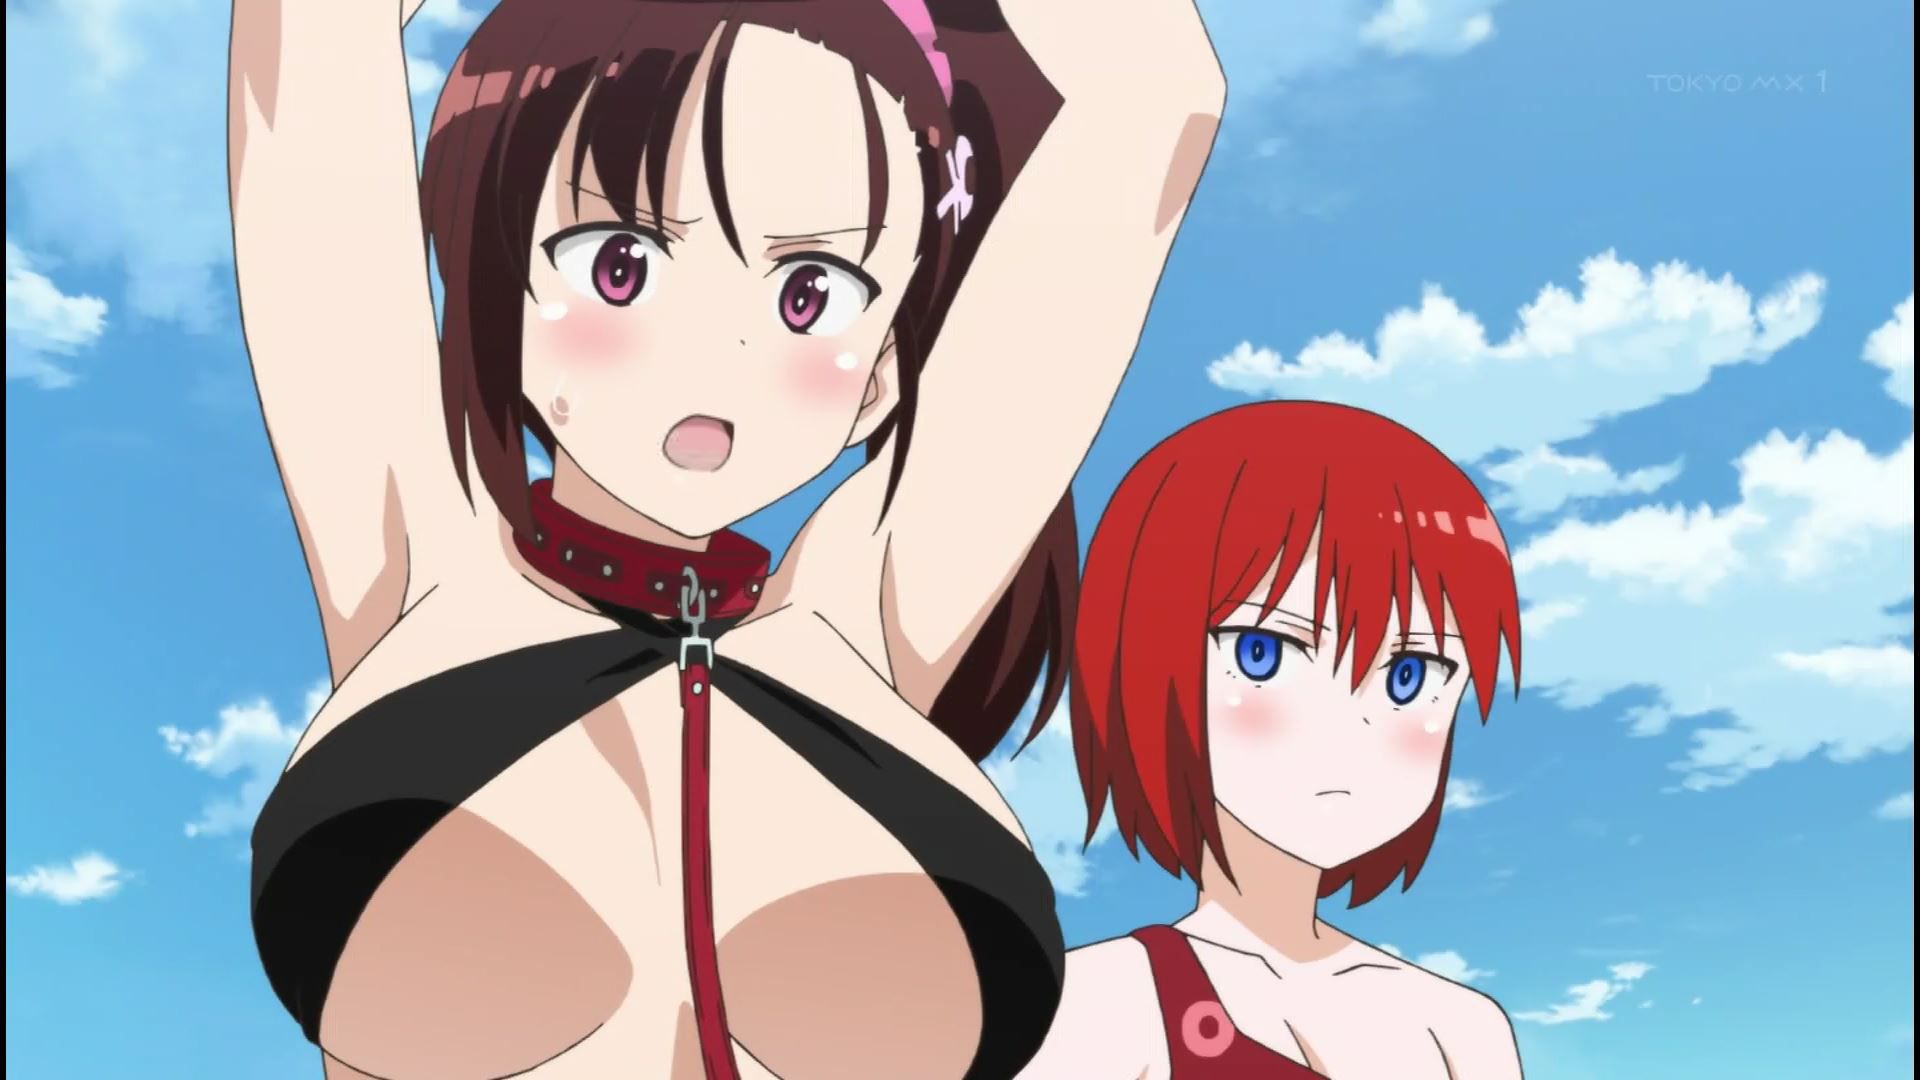 Anime [Shimarenuse] Seaton Gakuen] scene that girls become insanely erotic costumes in episode 12 10